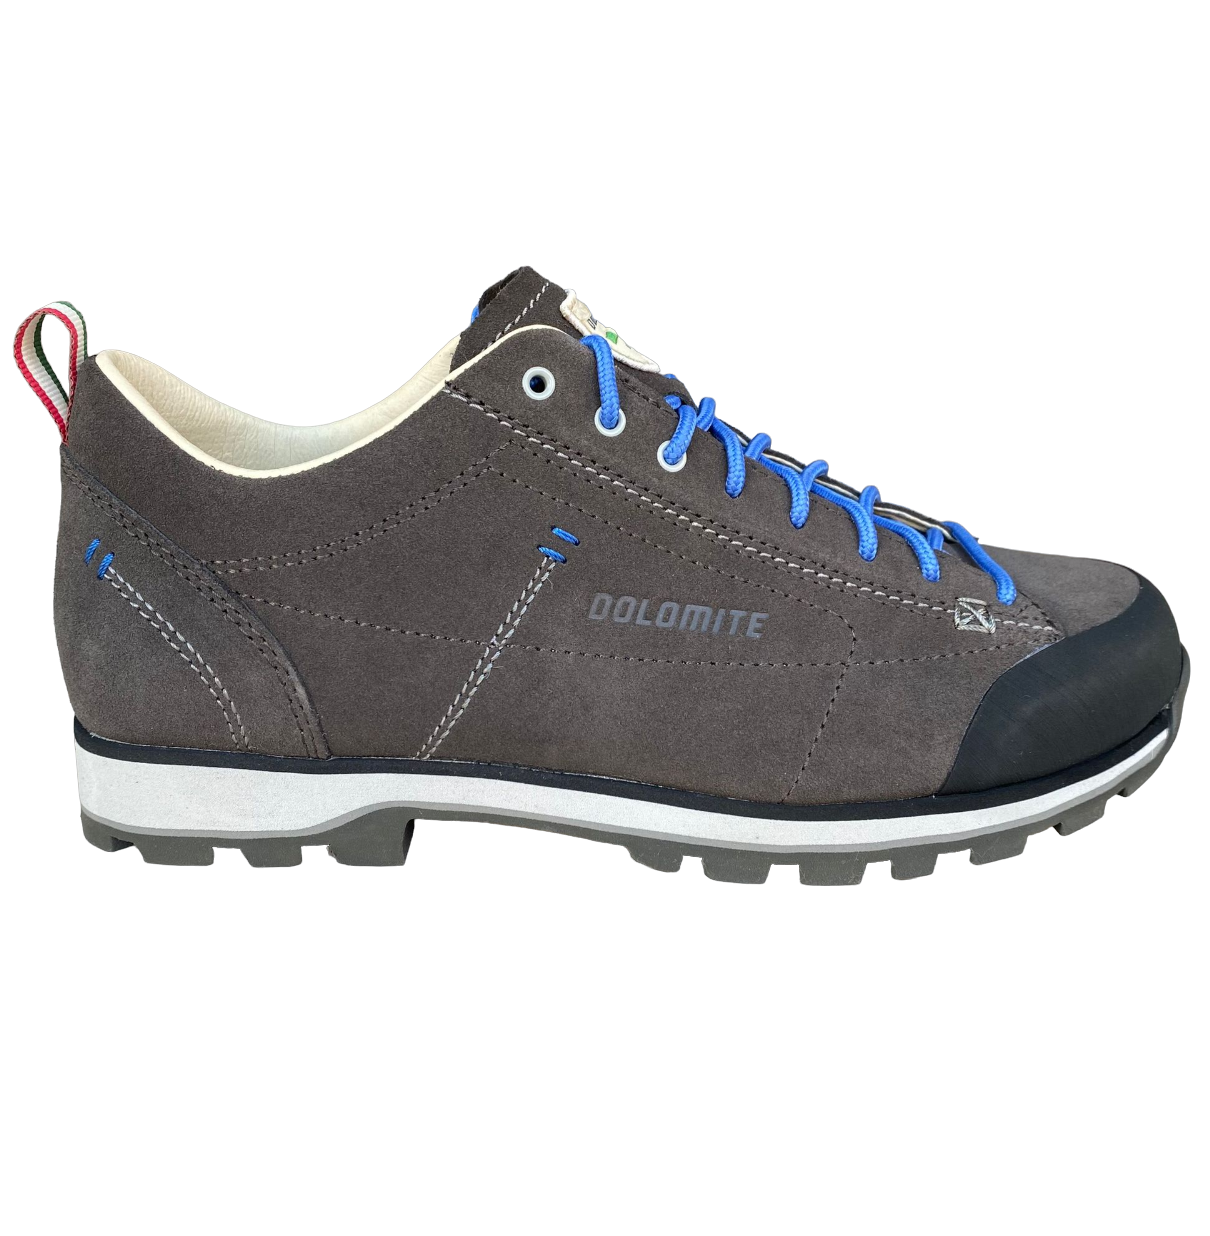 Dolomite scarpa casual 54 bassa in Goretex e Vibram 247950 ATBU antracite-blu